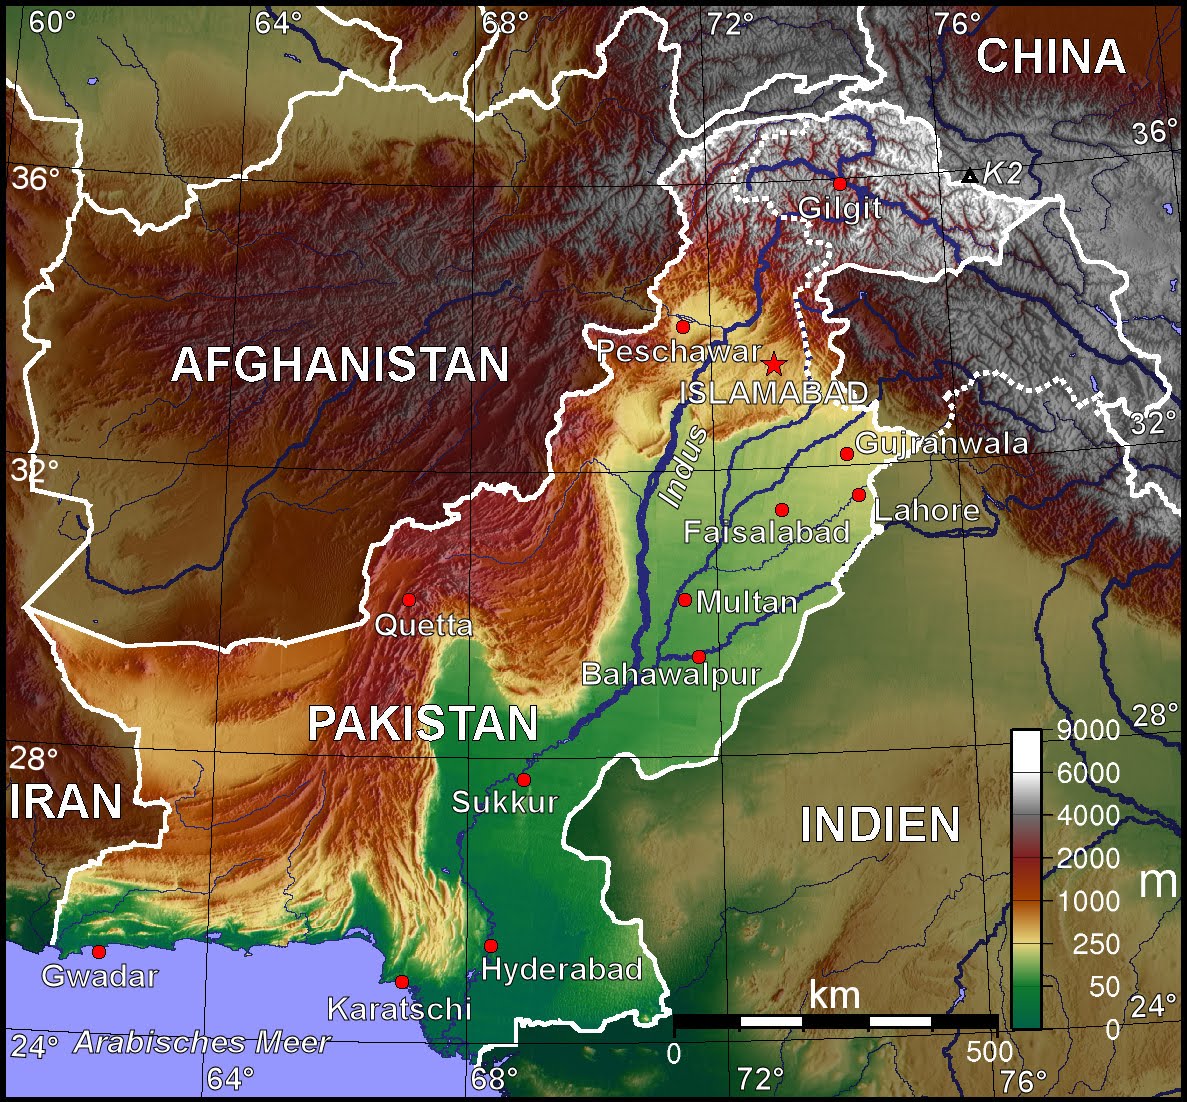 The Atlas of Pakistan: General maps